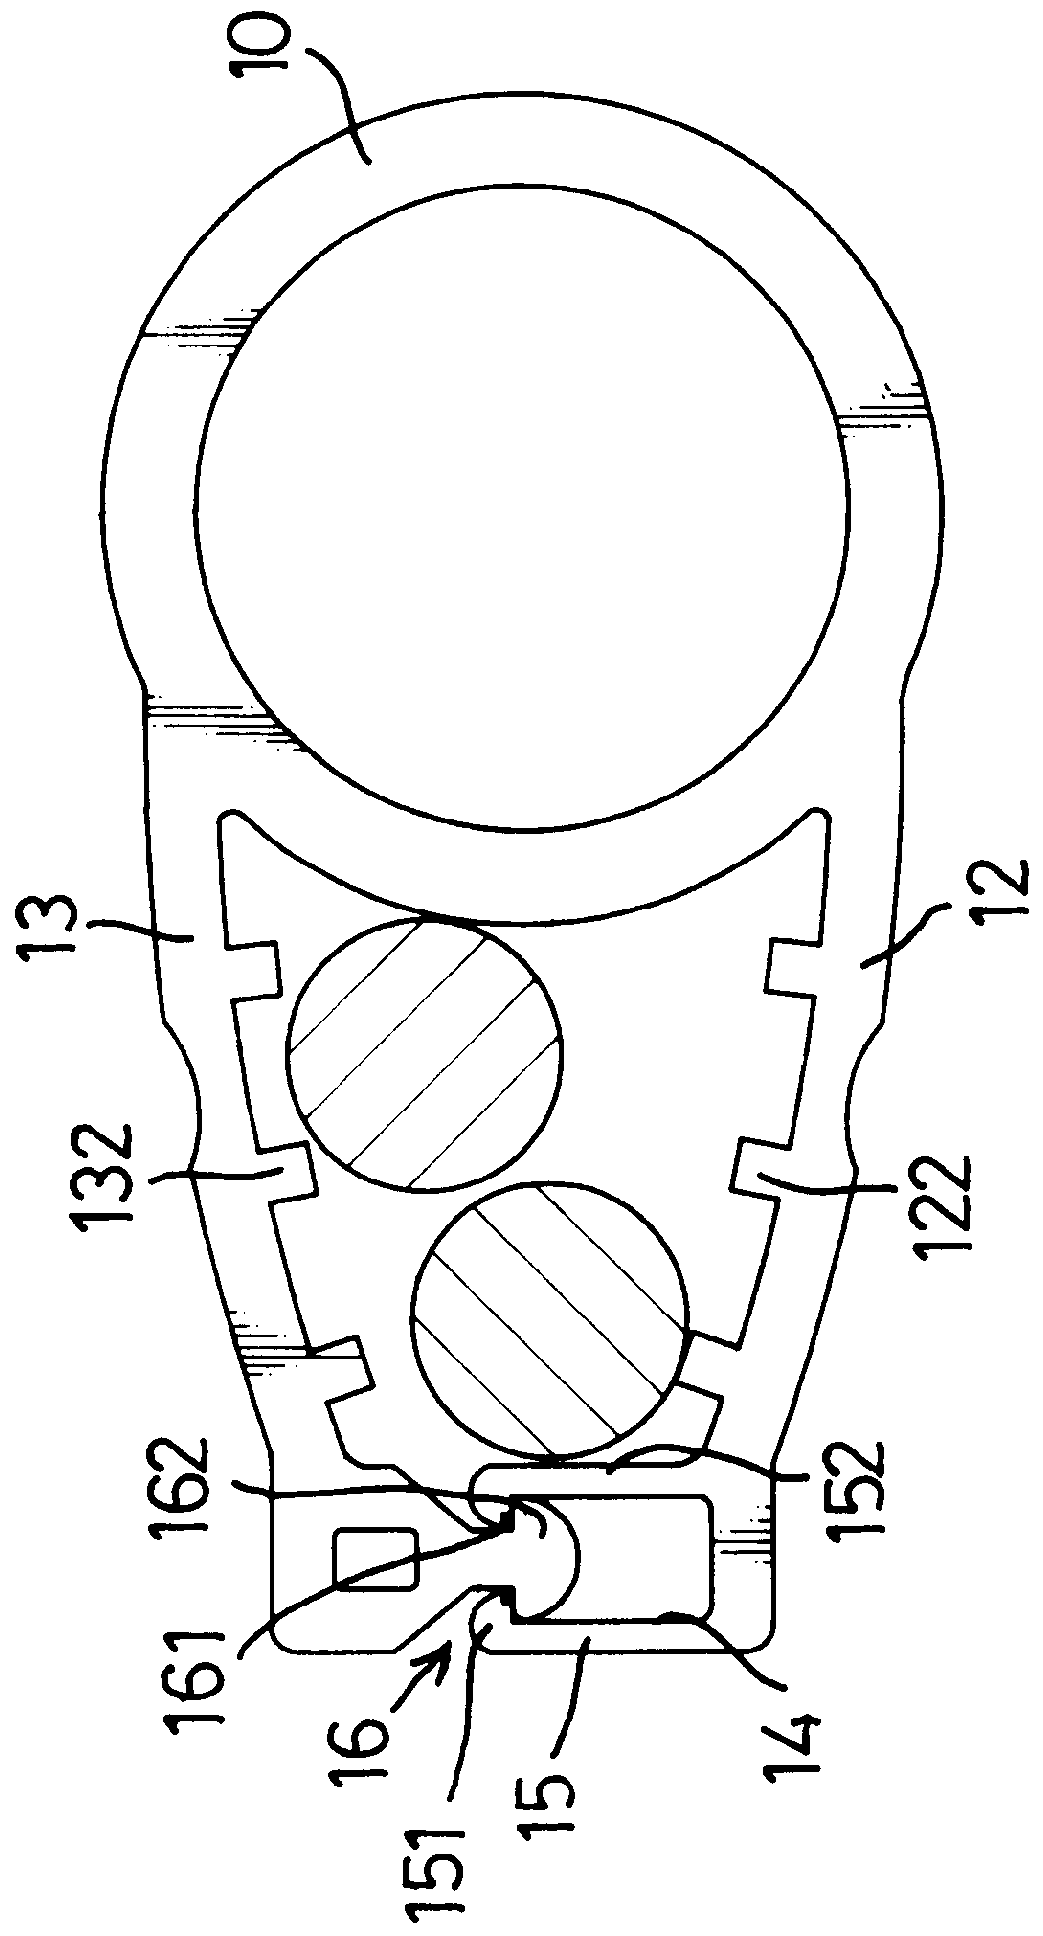 Socket for an ornamental bulb